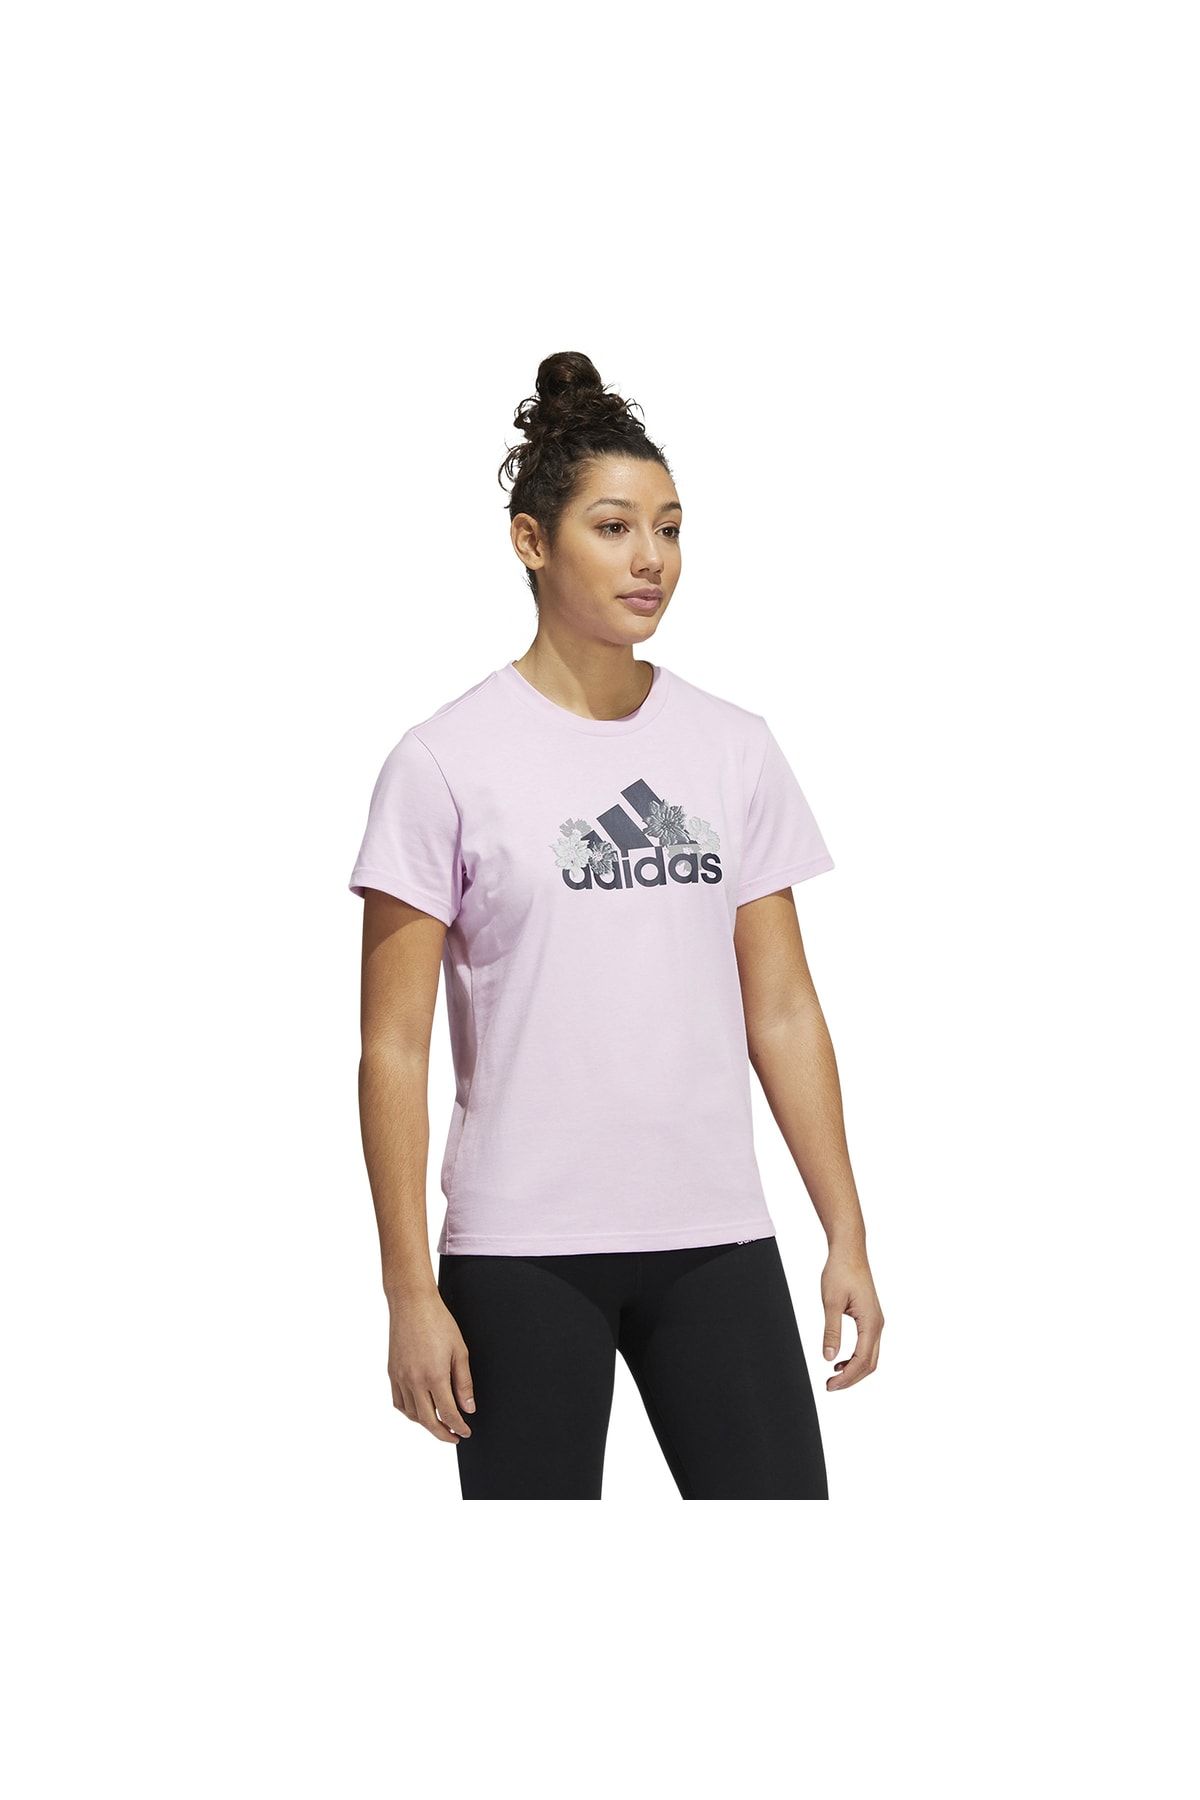 adidas T-Shirt Purple - Regular fit - Trendyol